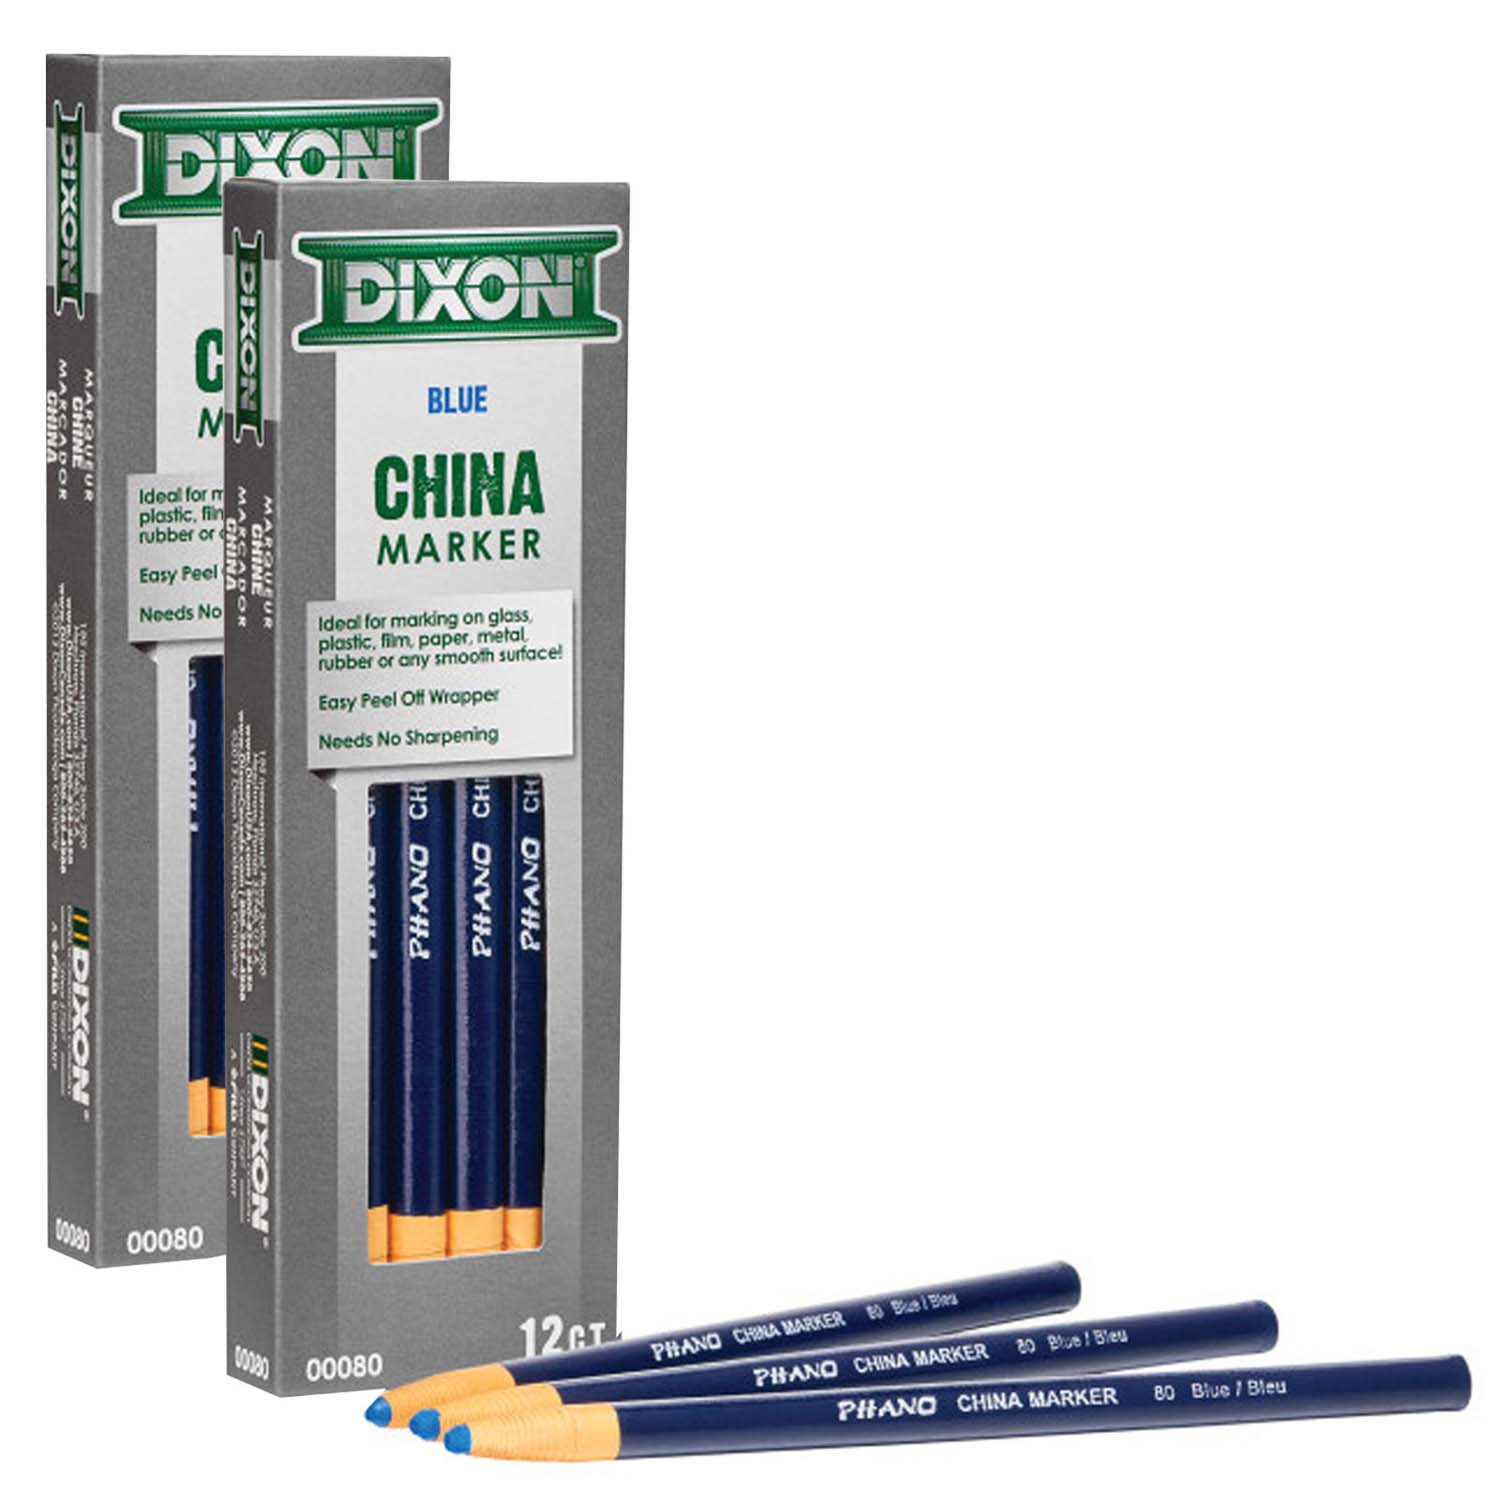 Phano China Markers, Blue, 12 Per Pack, 2 Packs